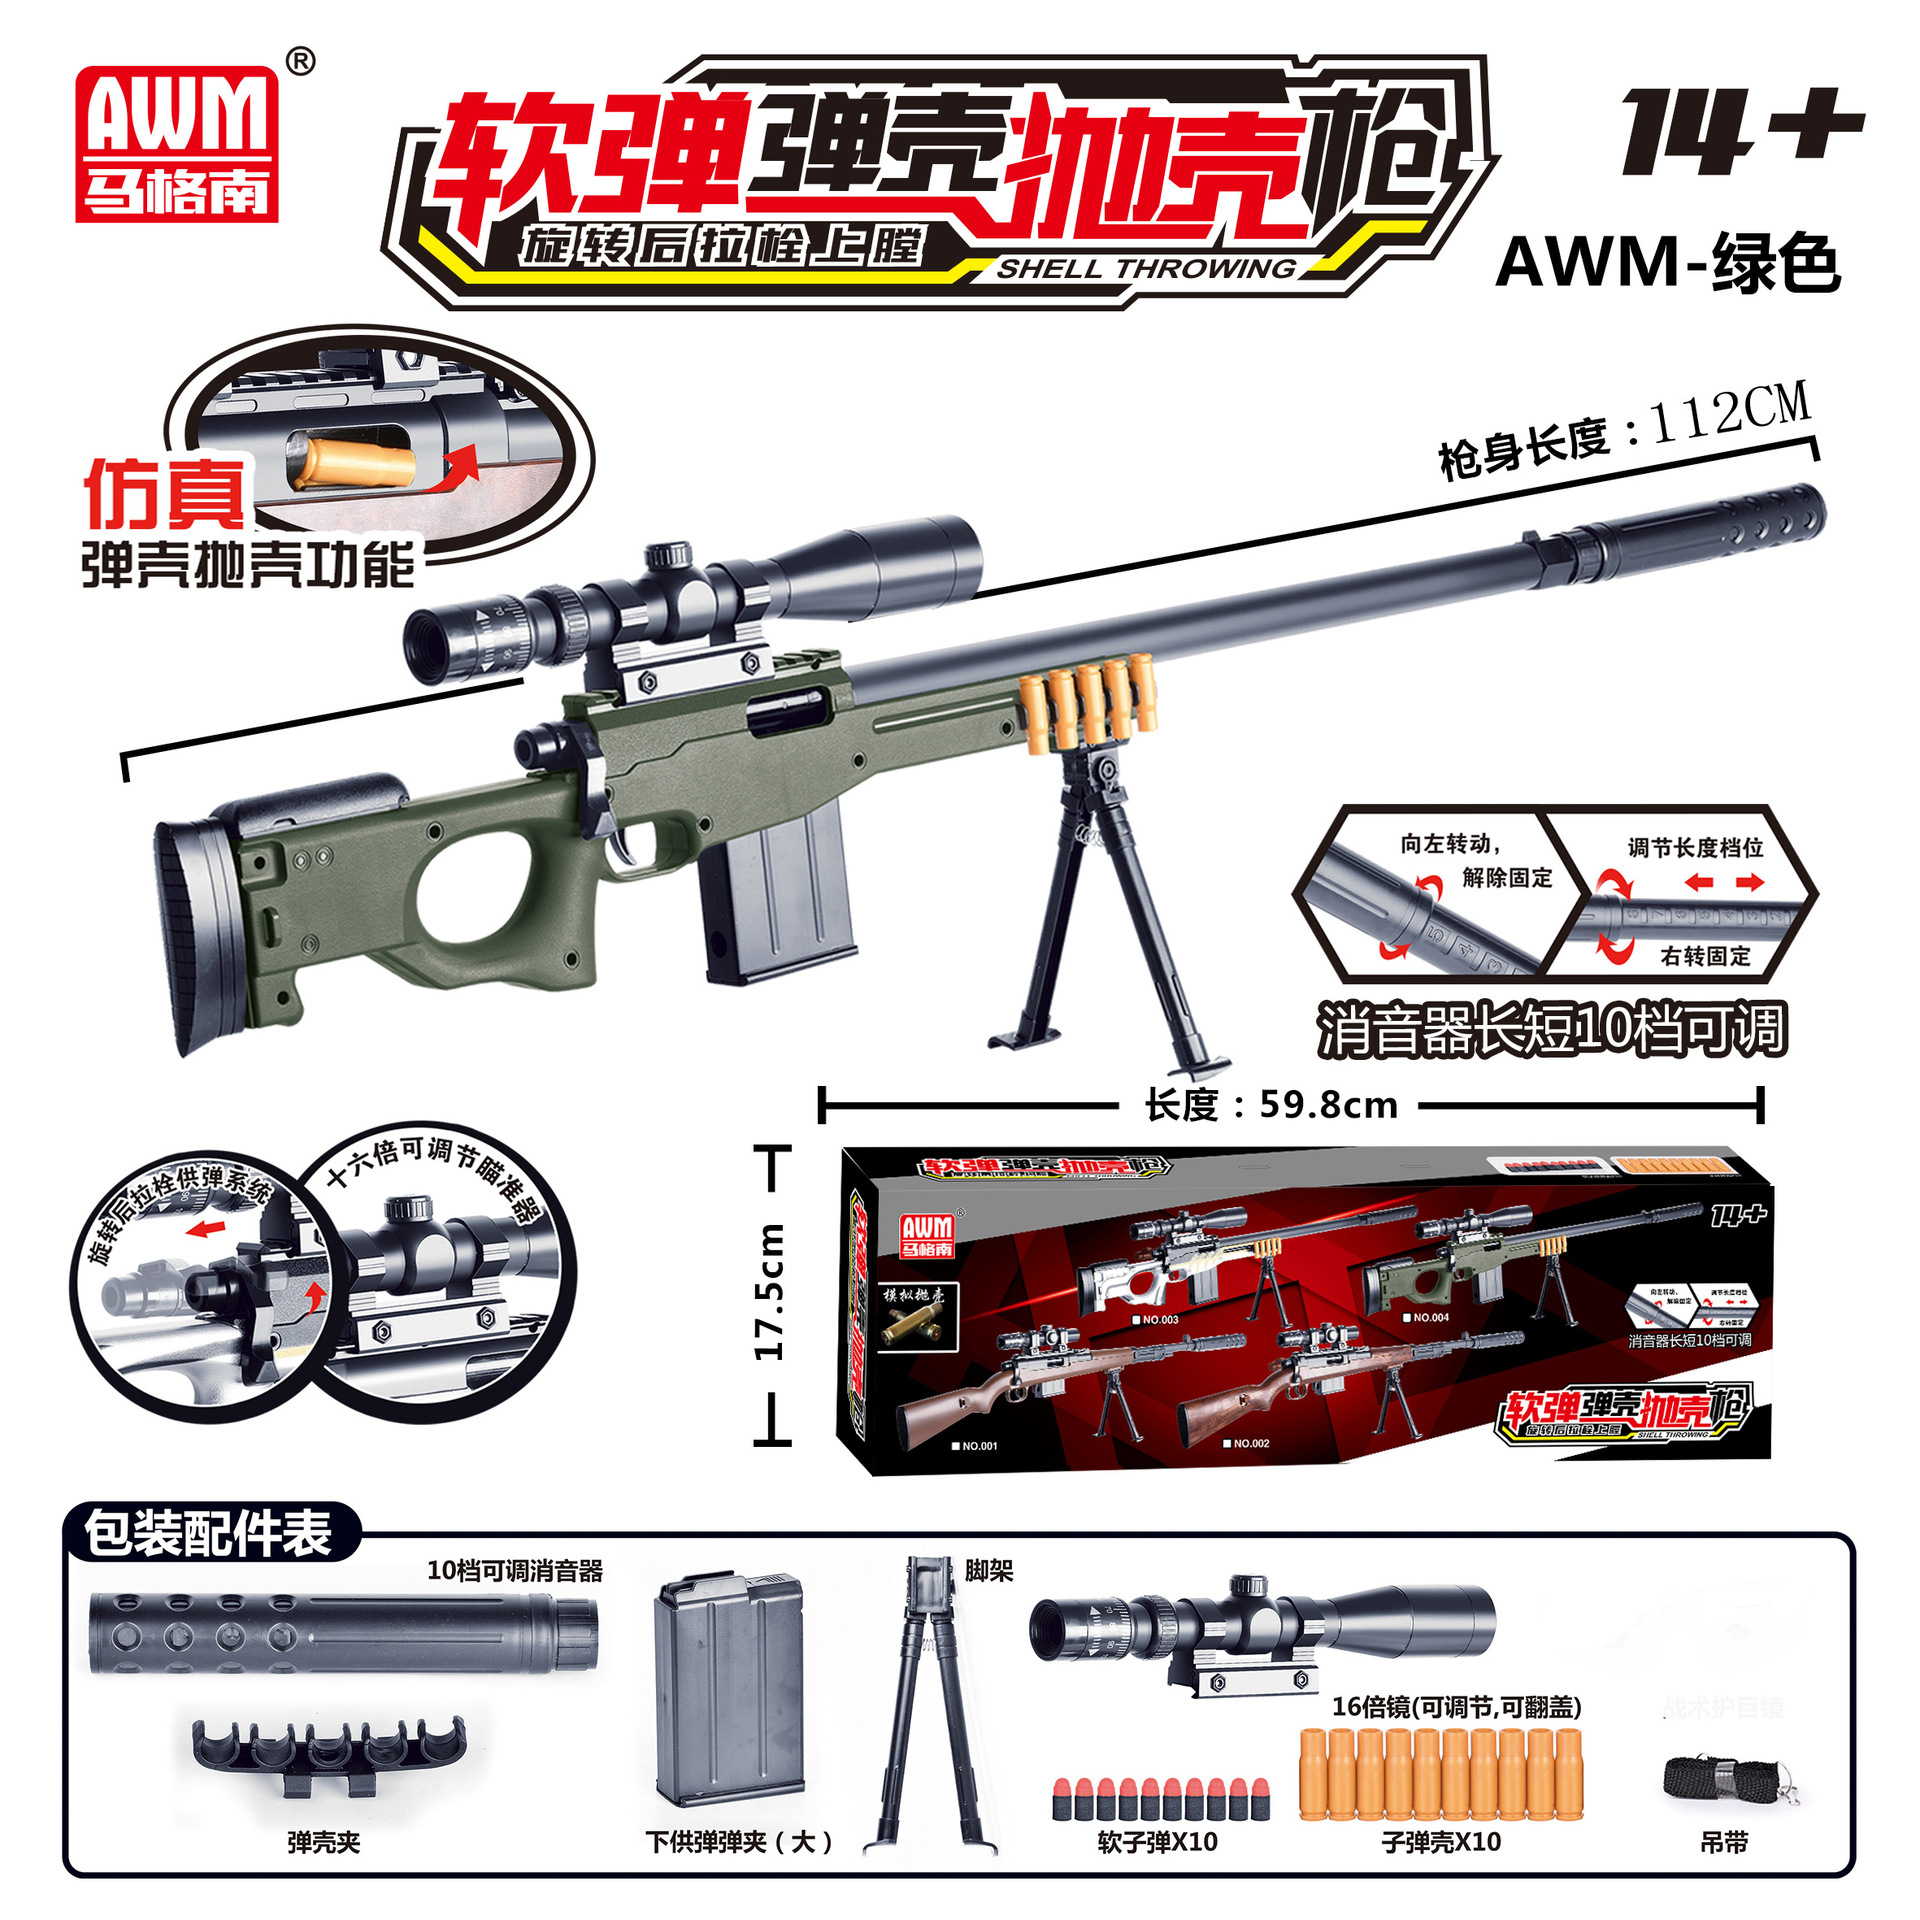 Children's AWM 98k M416 Throw Shell Chicken Soft Bullet Gun Star Belief Boy Toy Soft Bullet Model Gun